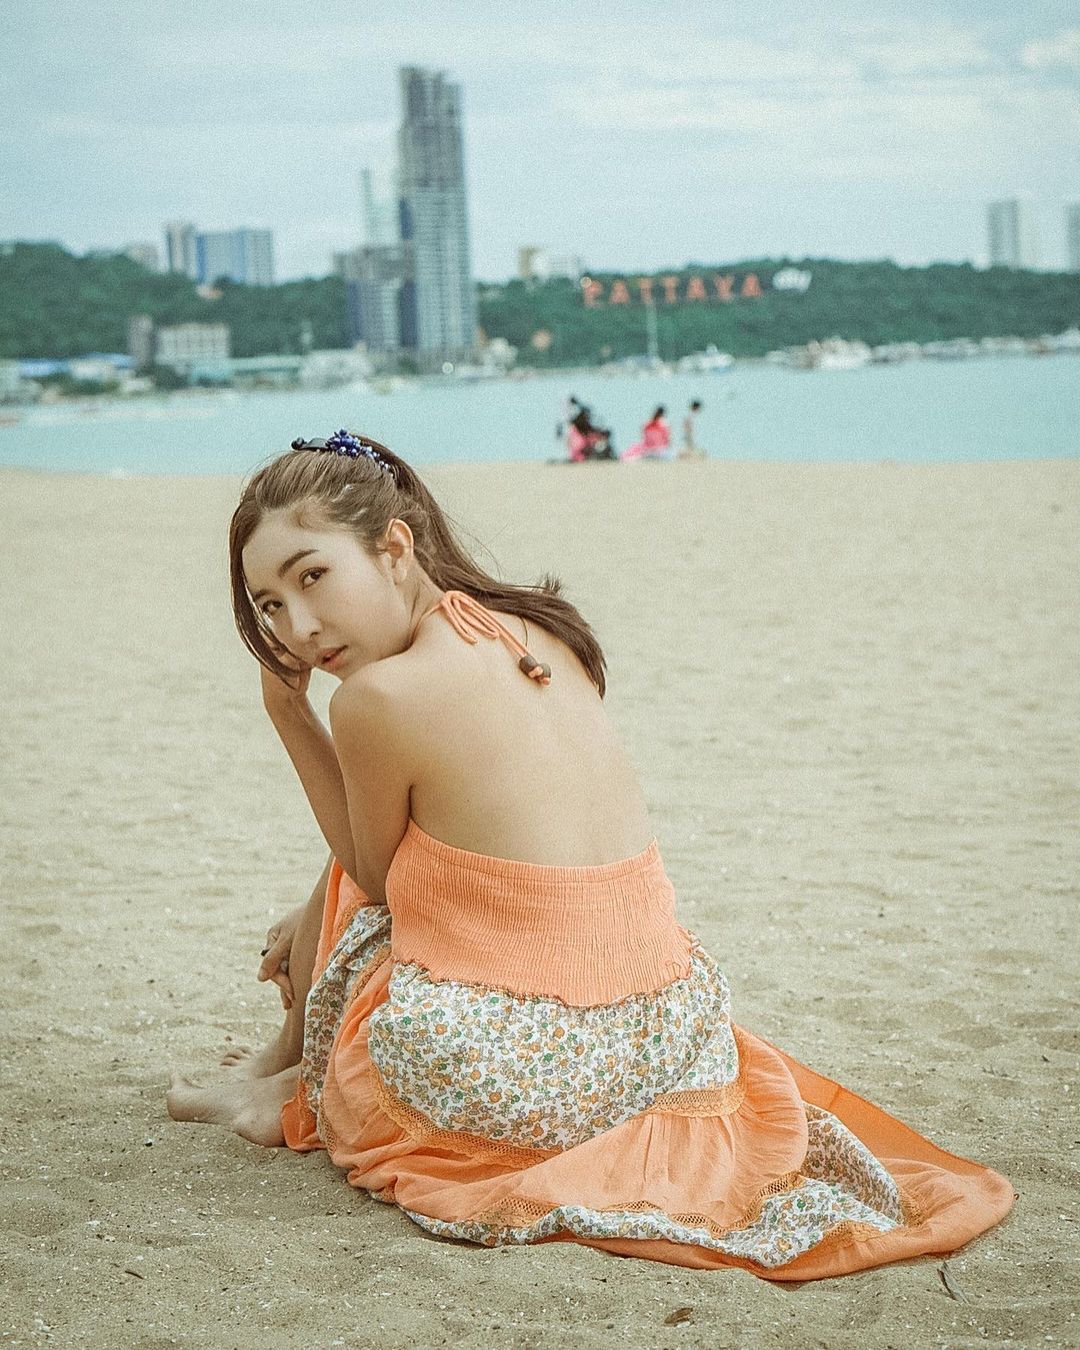 Lukpad Chaiyakham Most Beautiful Thailand Ladyboy On The Beach Instagram Photos Thai Transgender